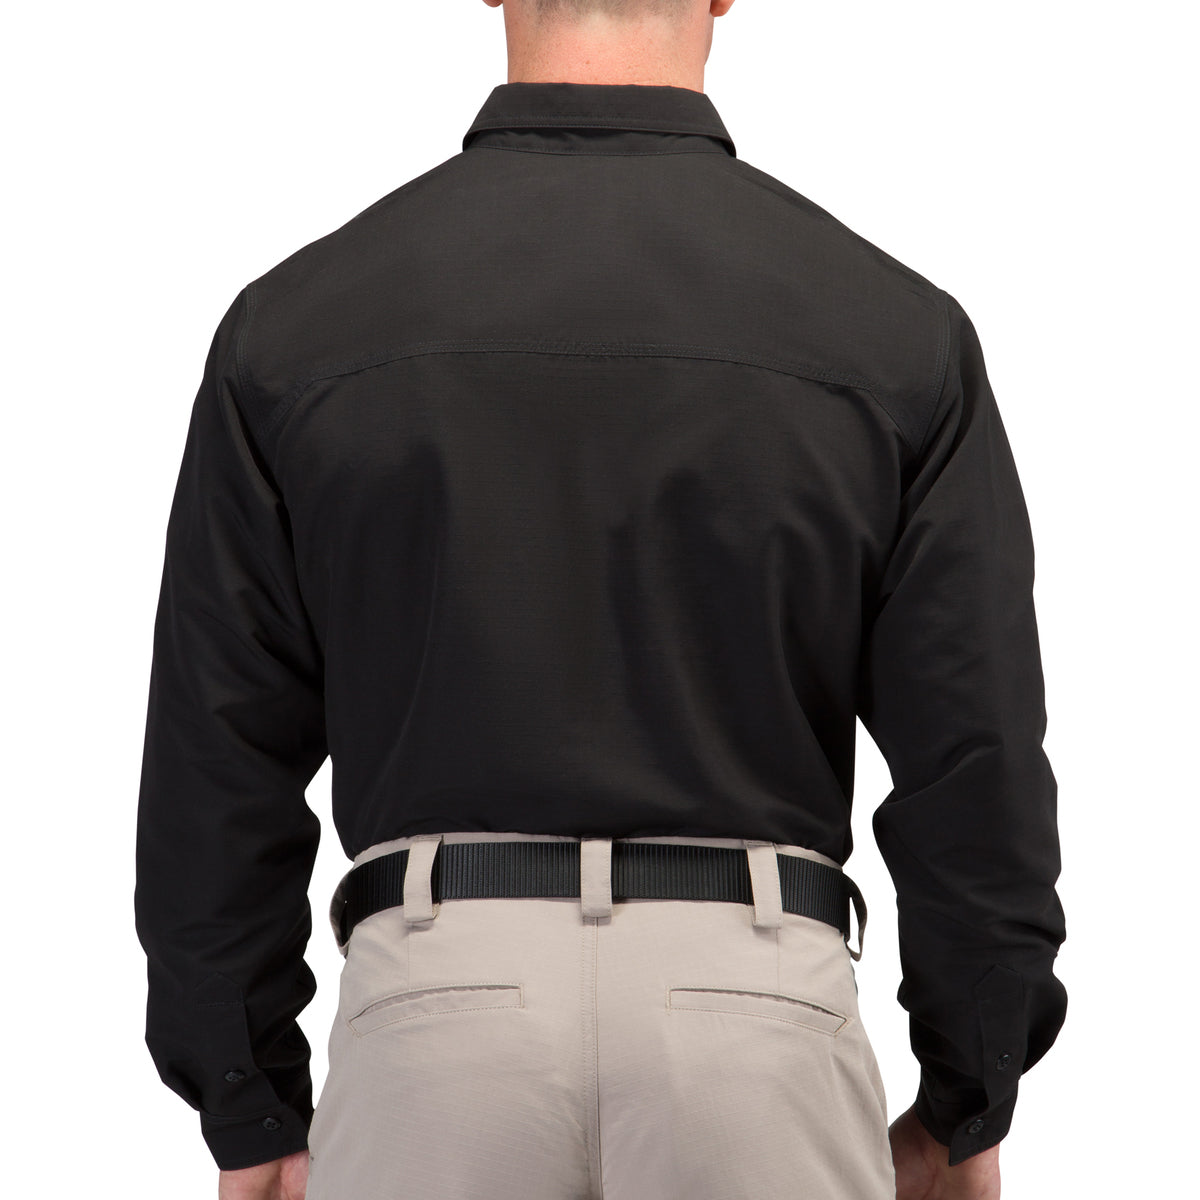 5.11 Fast-Tac TDU Long Sleeve Shirt Black Shirts 5.11 Tactical Small Tactical Gear Supplier Tactical Distributors Australia